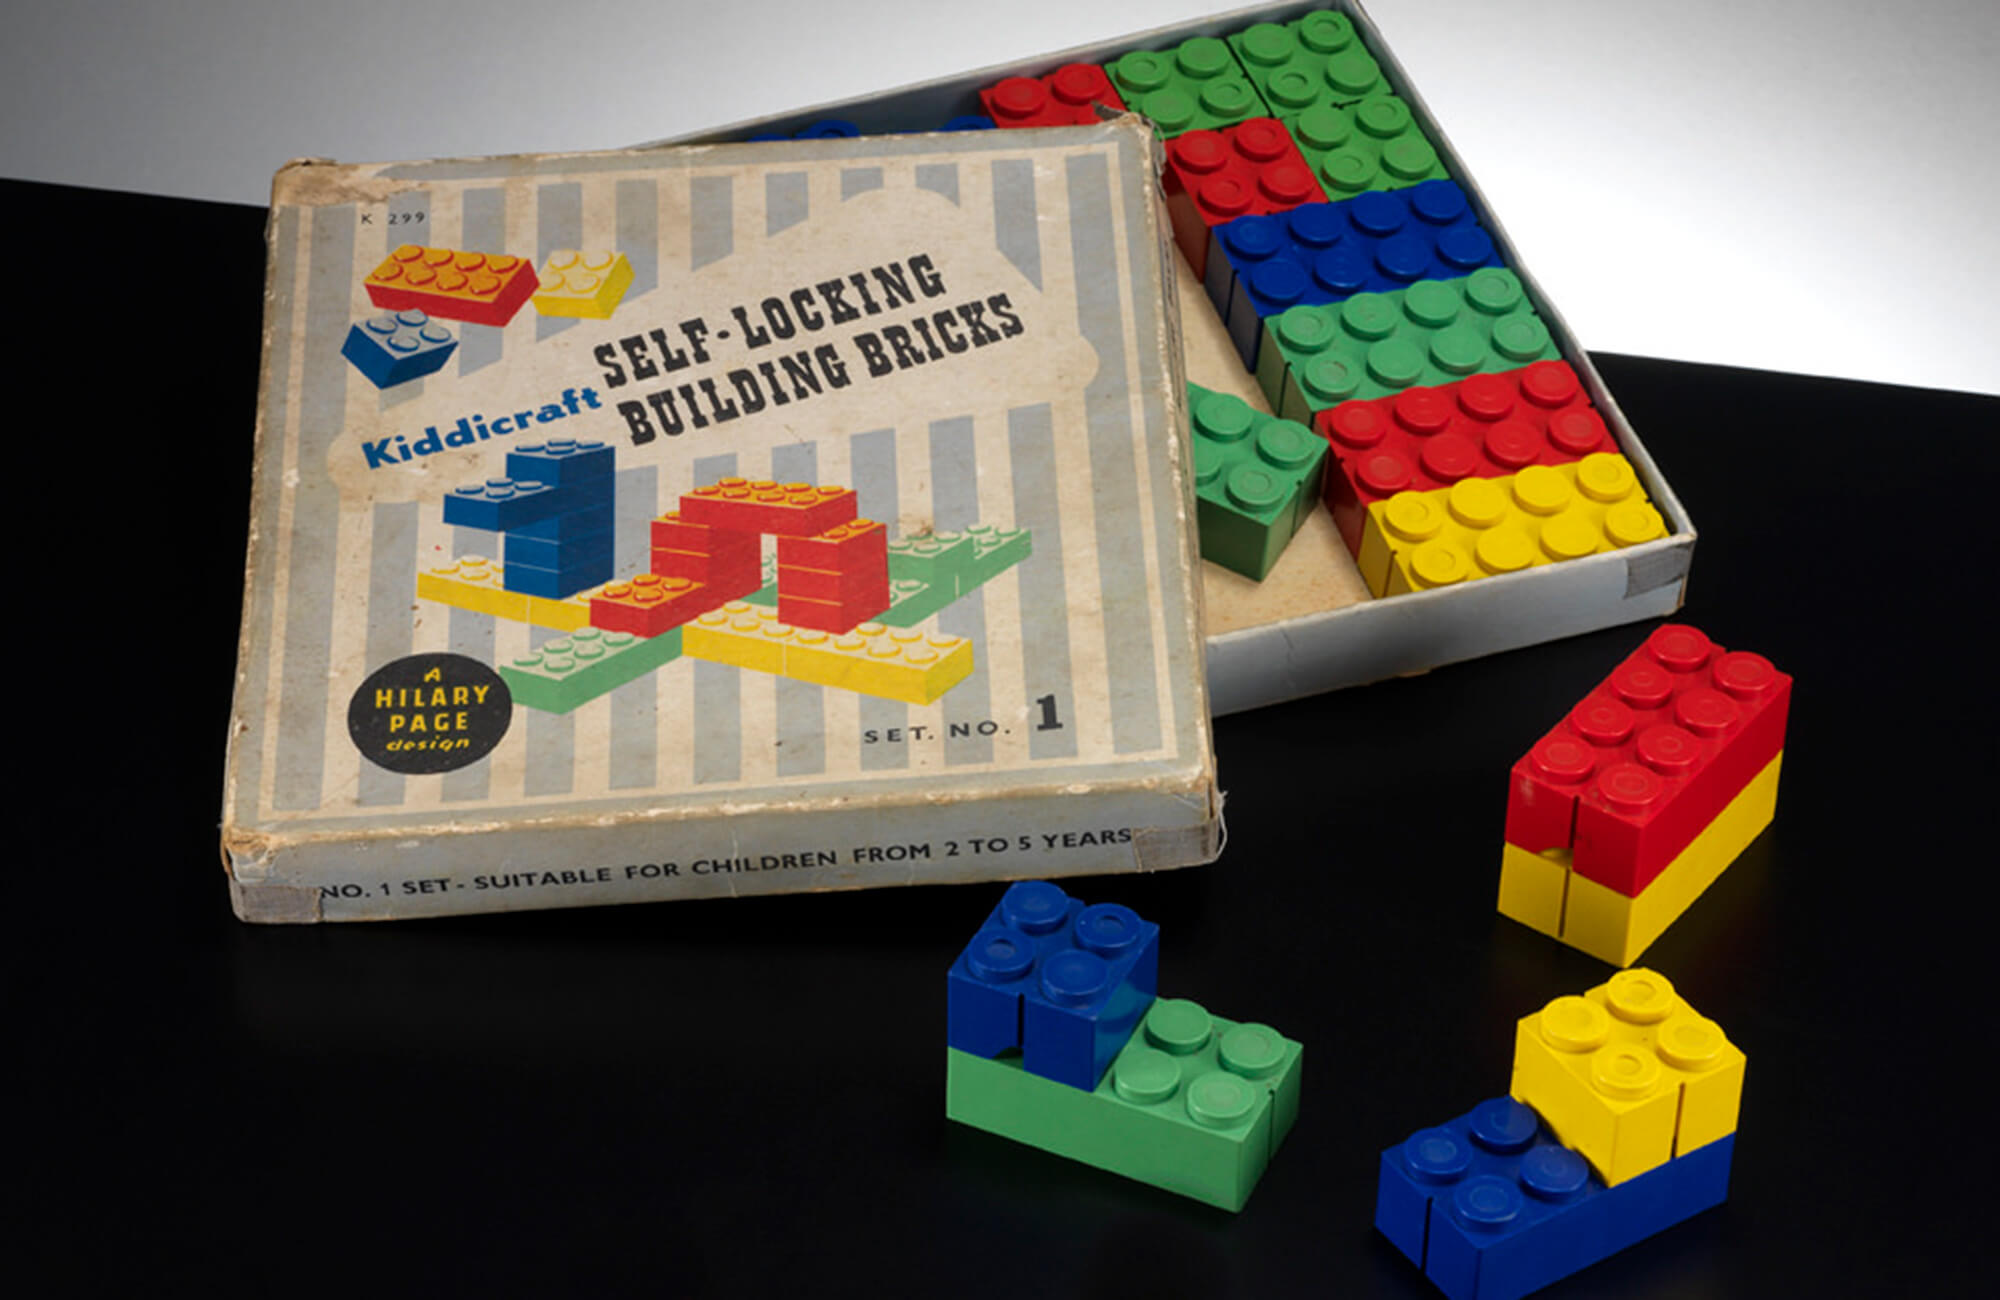 The Self-Locking Building Bricks Kiddicraft